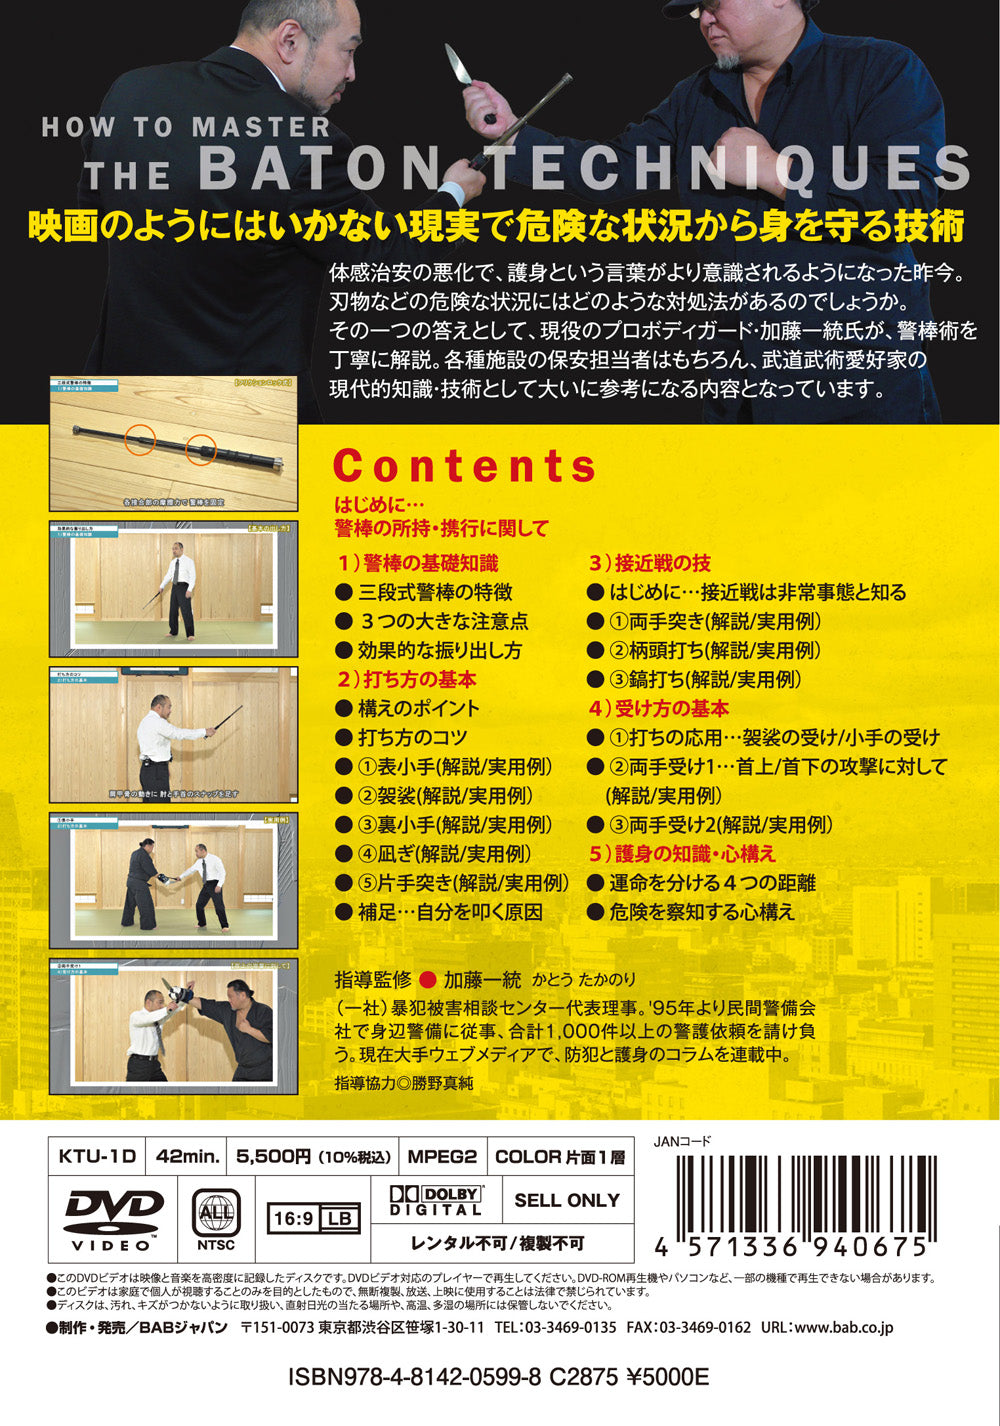 How to Master Baton Techniques DVD by Takanori Kato